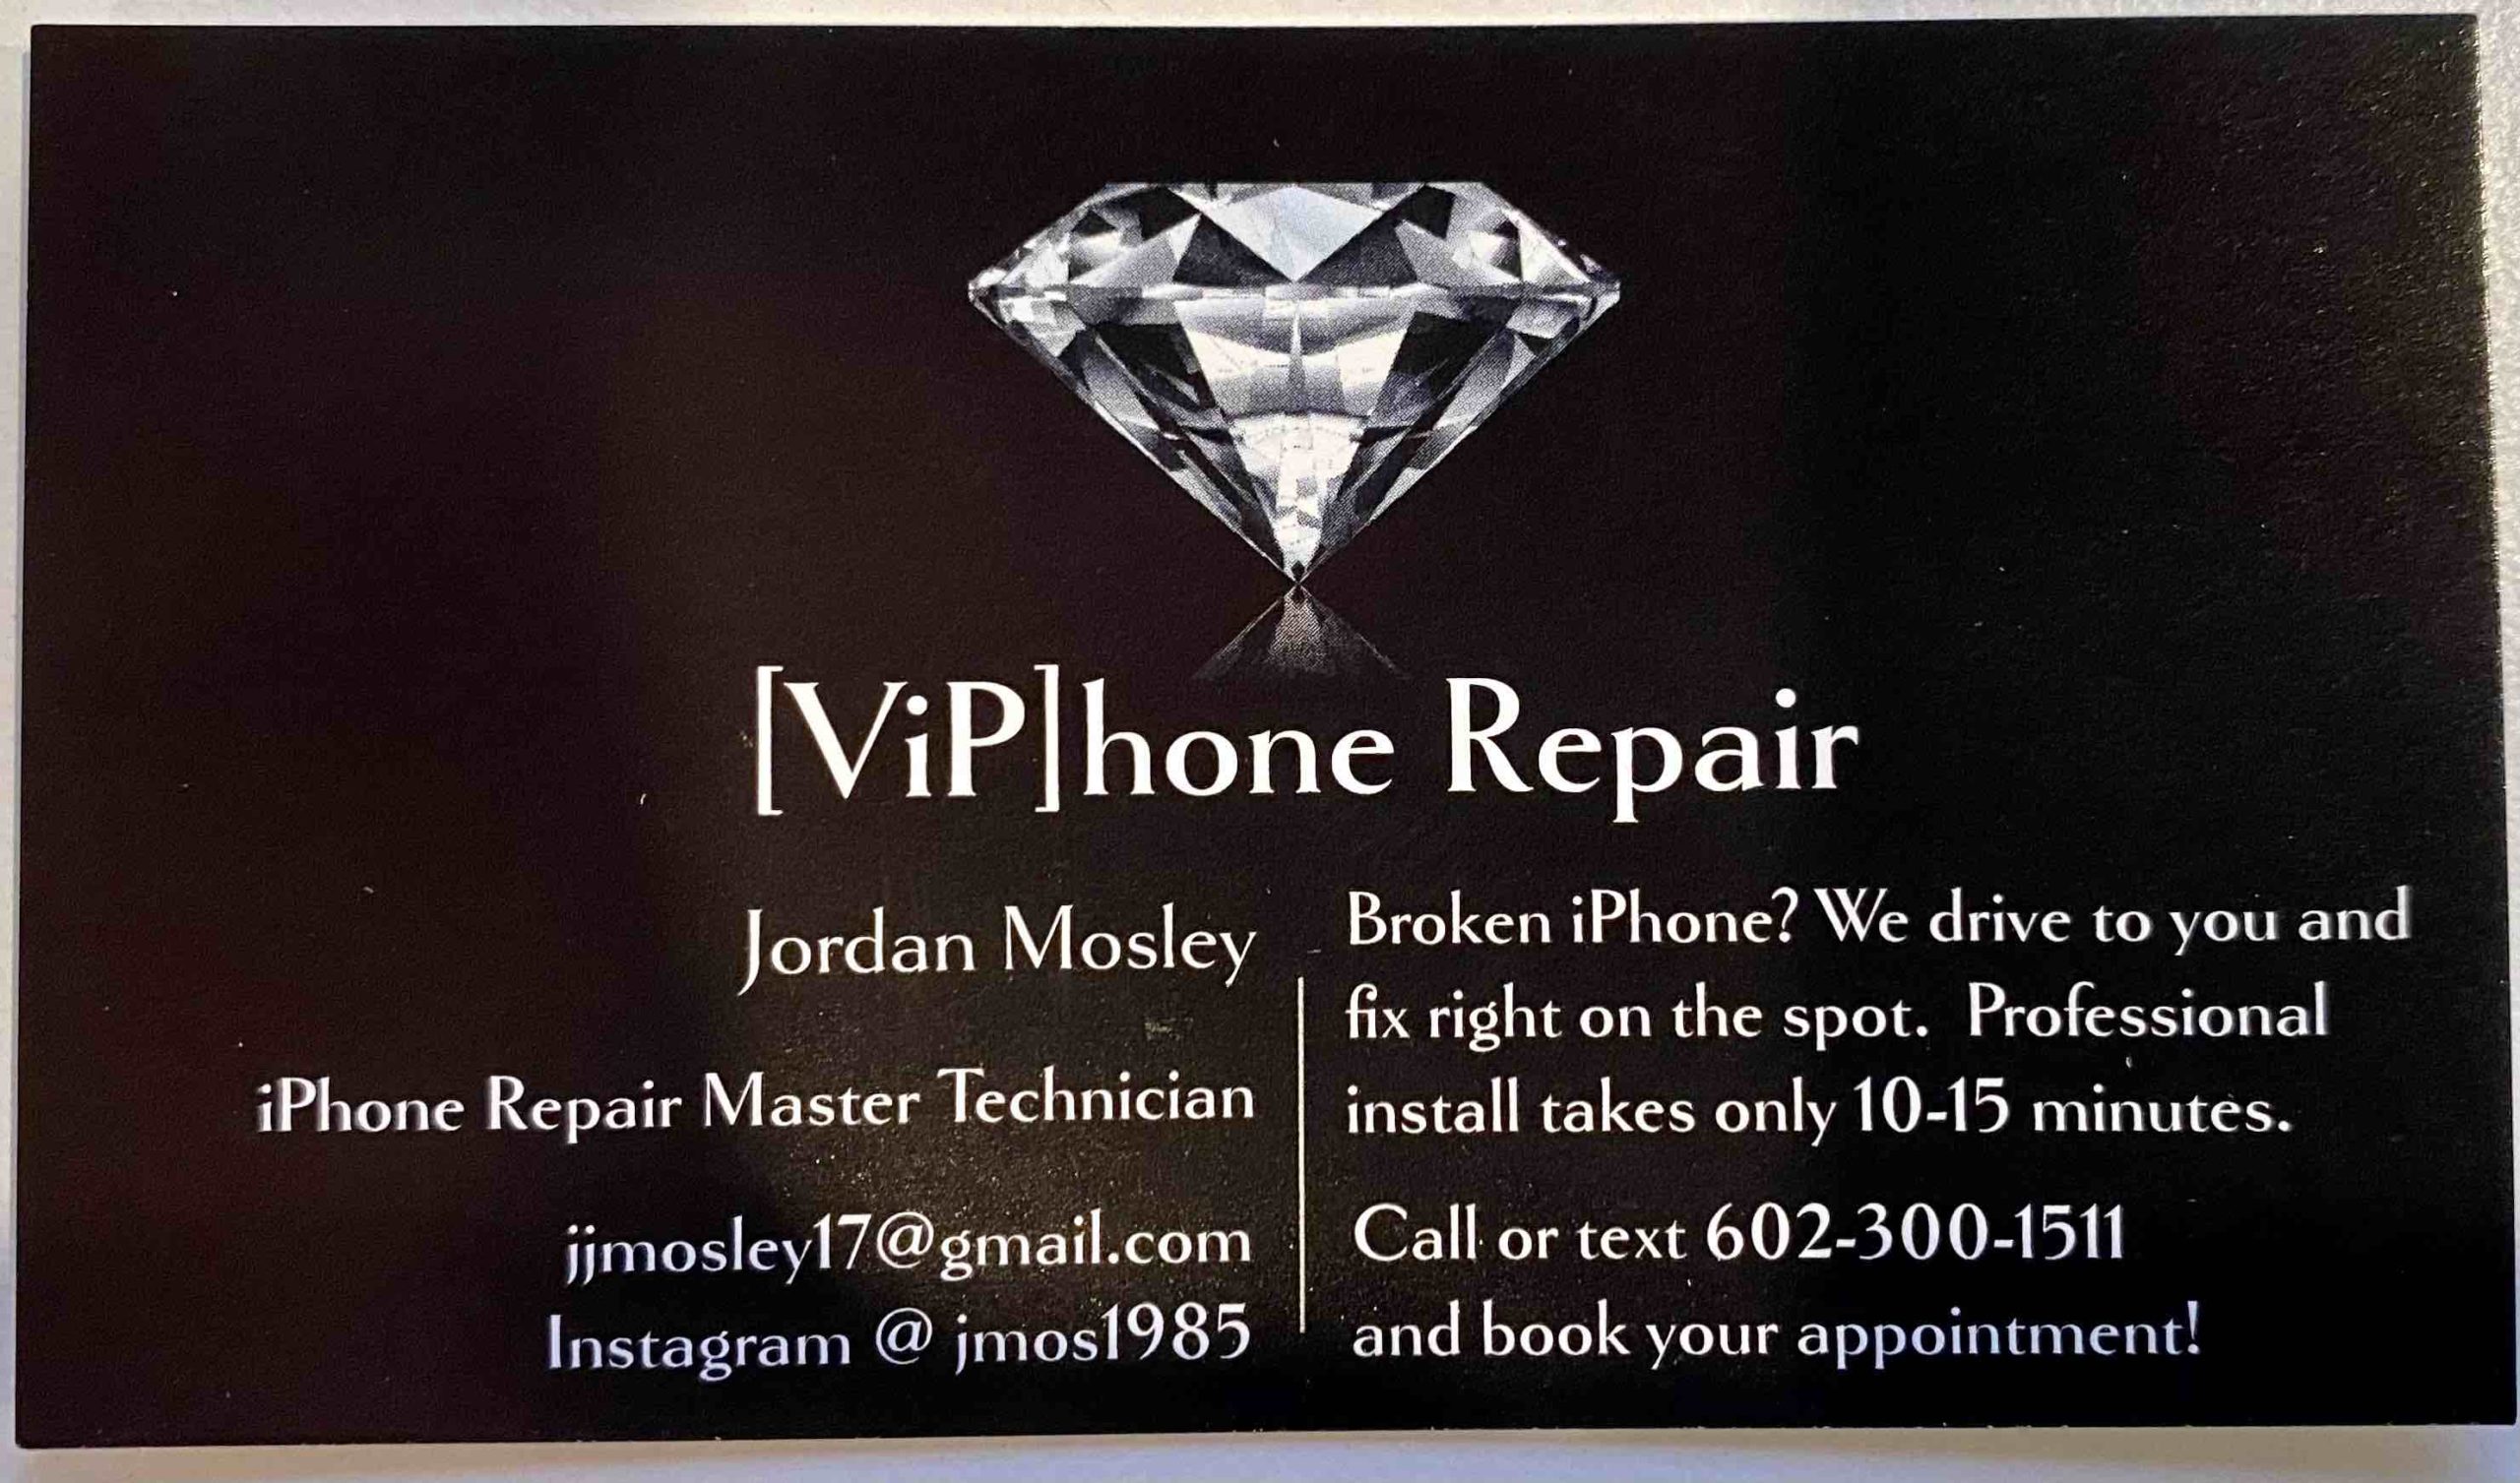 Broken iPhone or iPad in Gilbert? ViPhone Repair can fix it